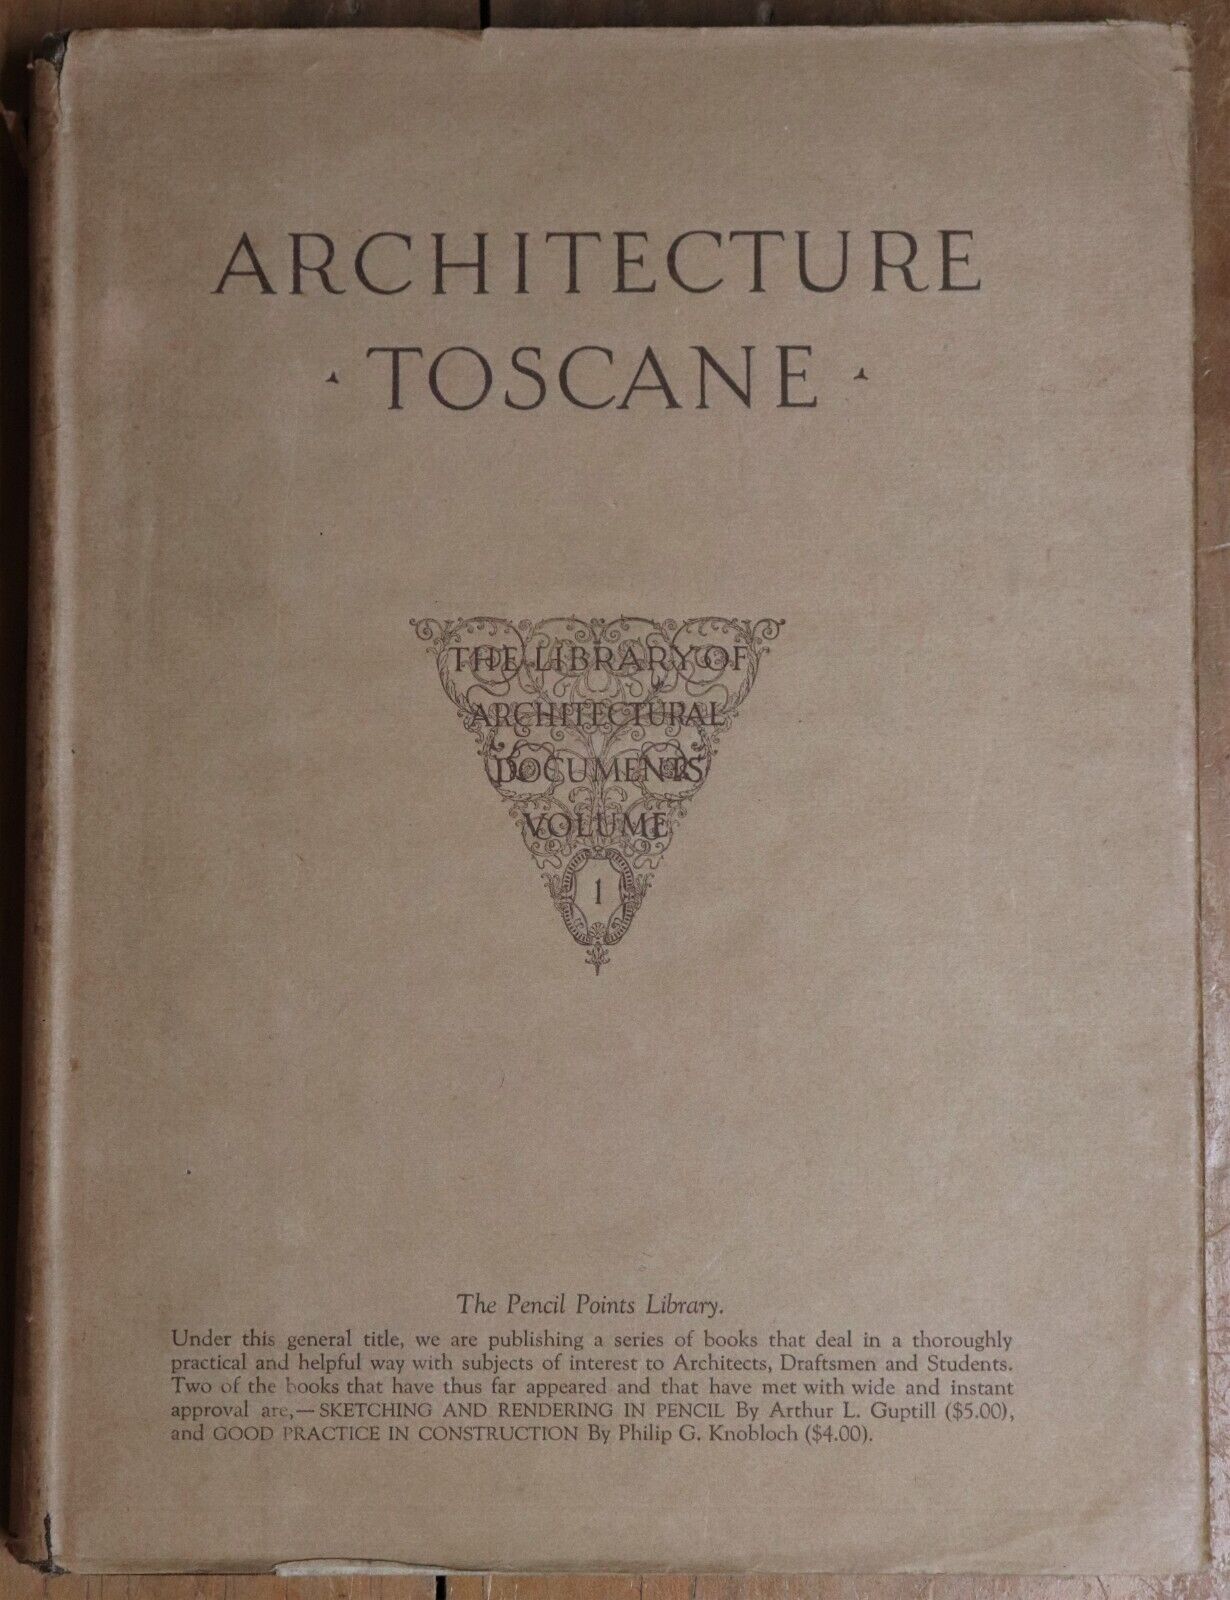 Architecture Toscane - 1923 - Pencil Points Press - Rare Book 1st Edition